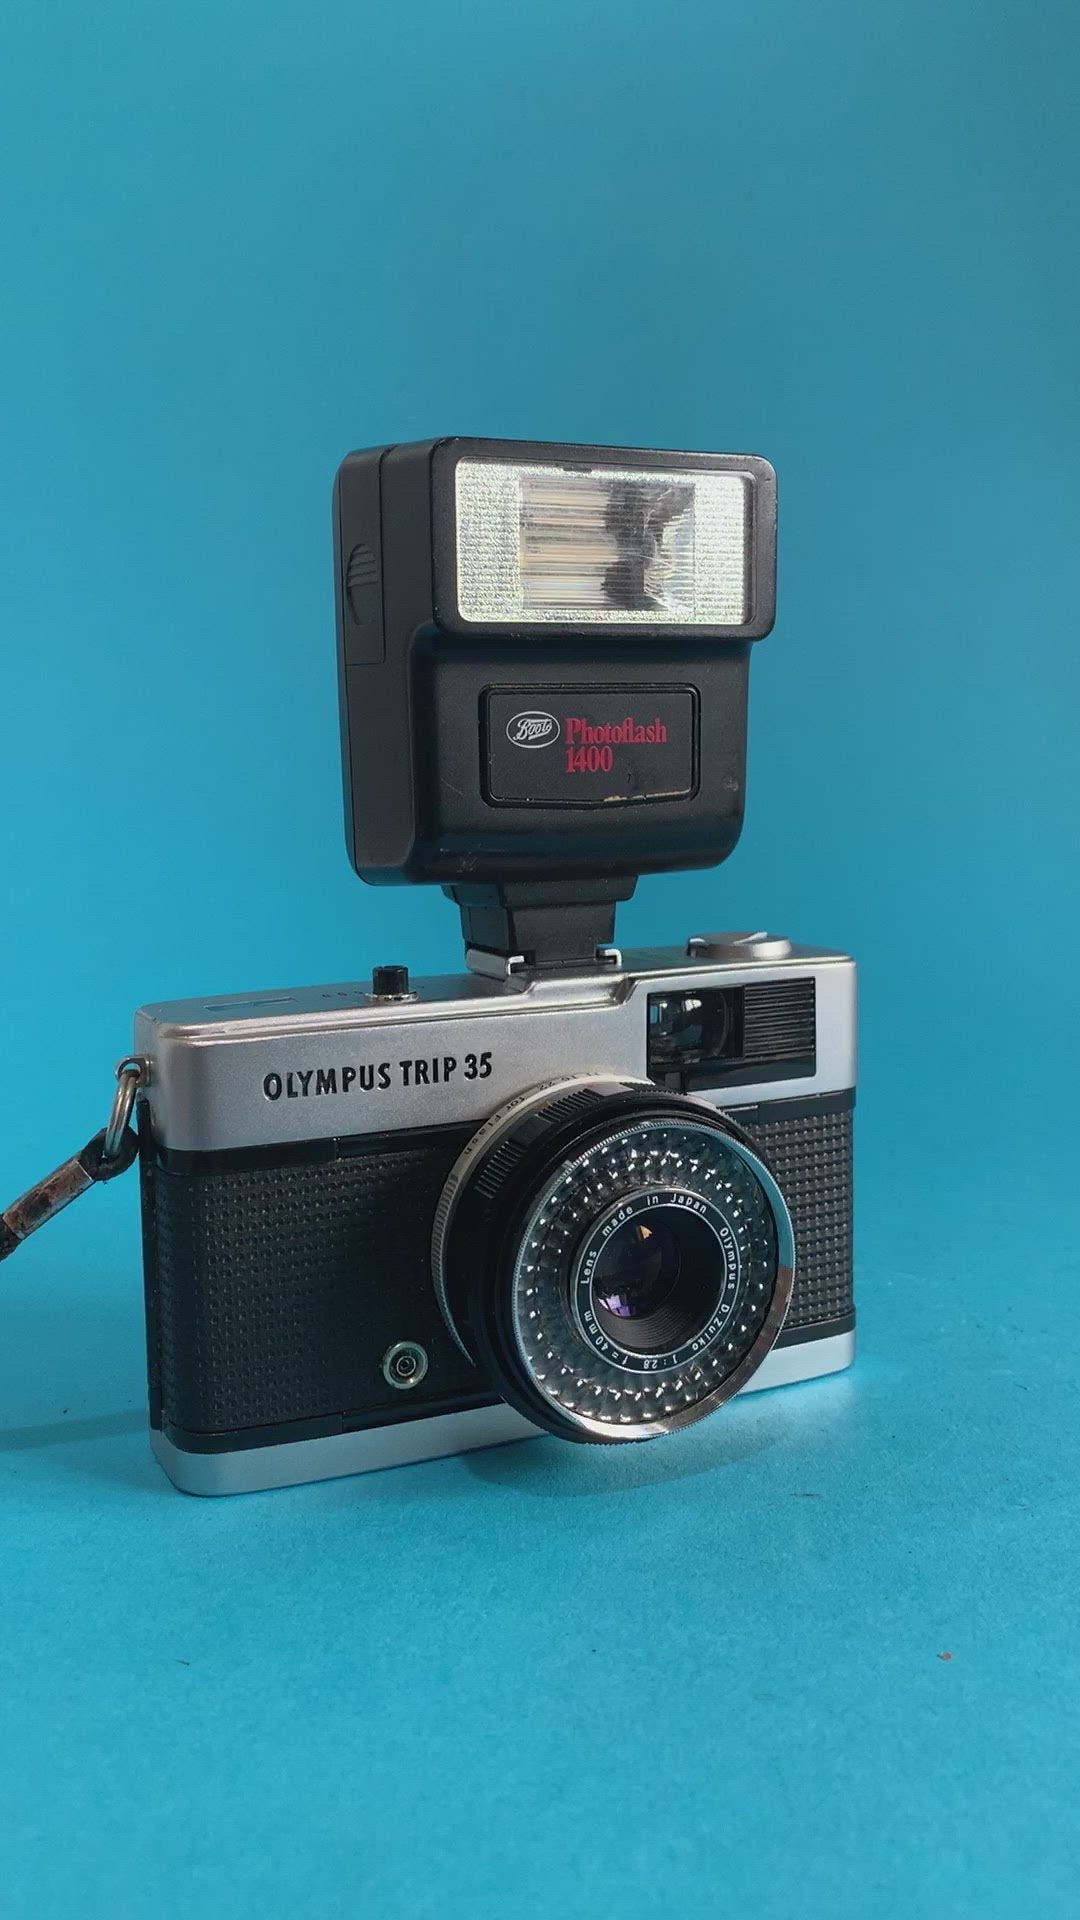 Photoflash 1400 External Flash Unit for 35mm Film Camera - Film Camera Store